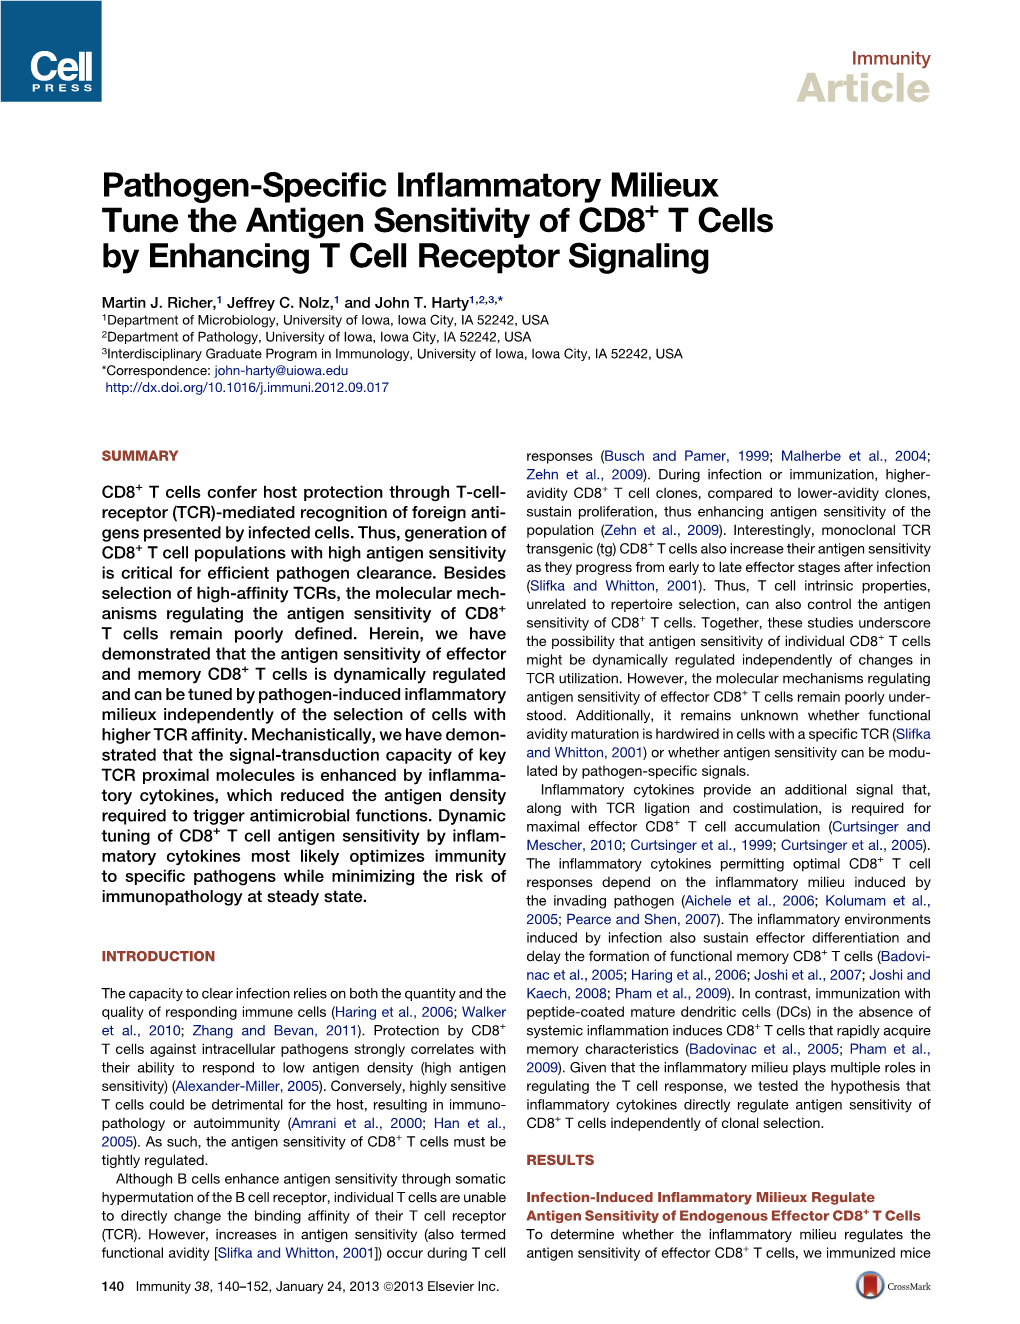 Pathogen-Specific Inflammatory Milieux Tune the Antigen Sensitivity